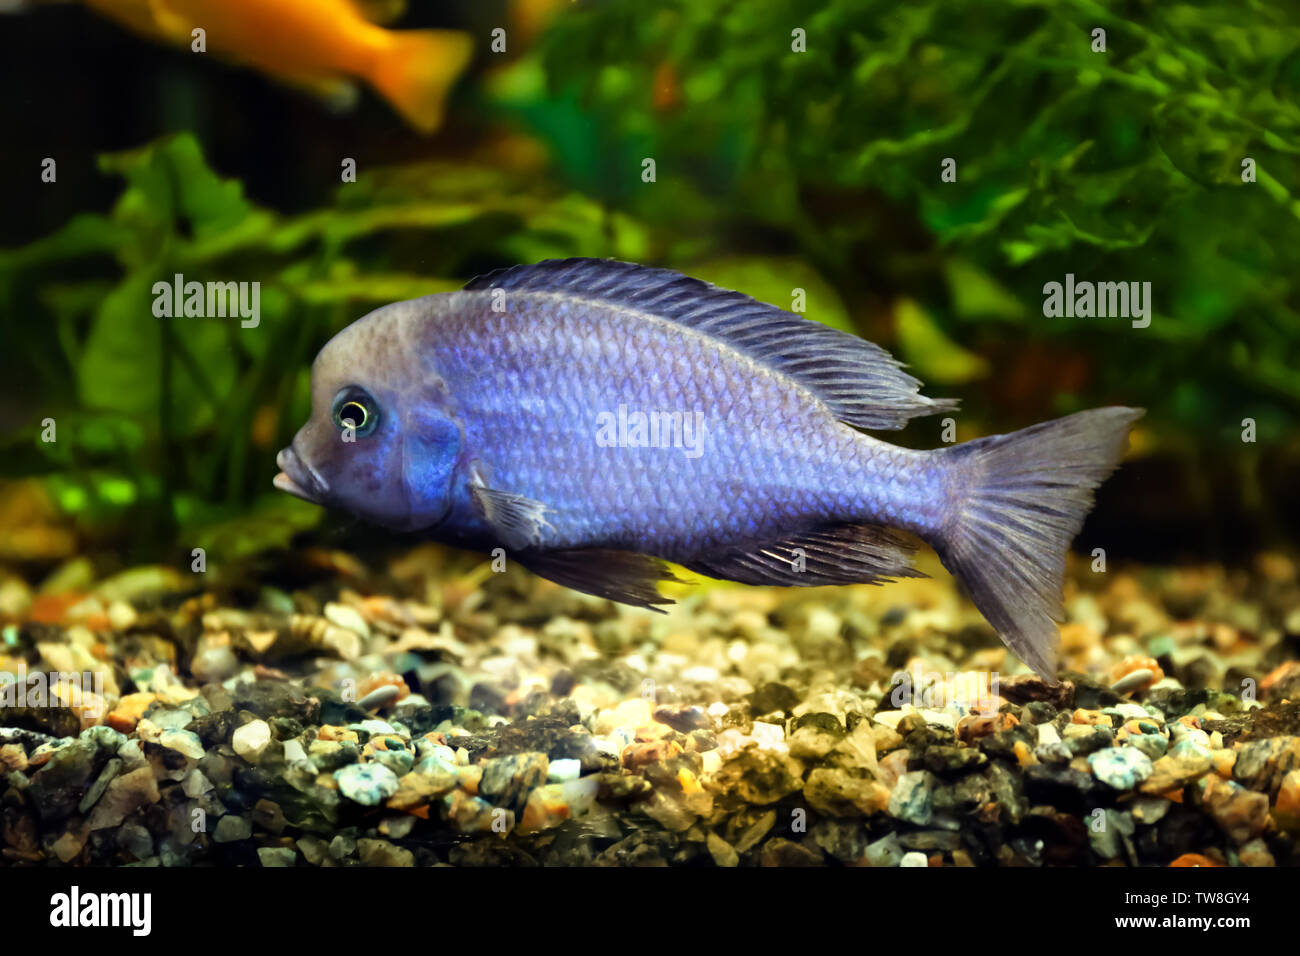 Freshwater fish in aquarium Stock Photo